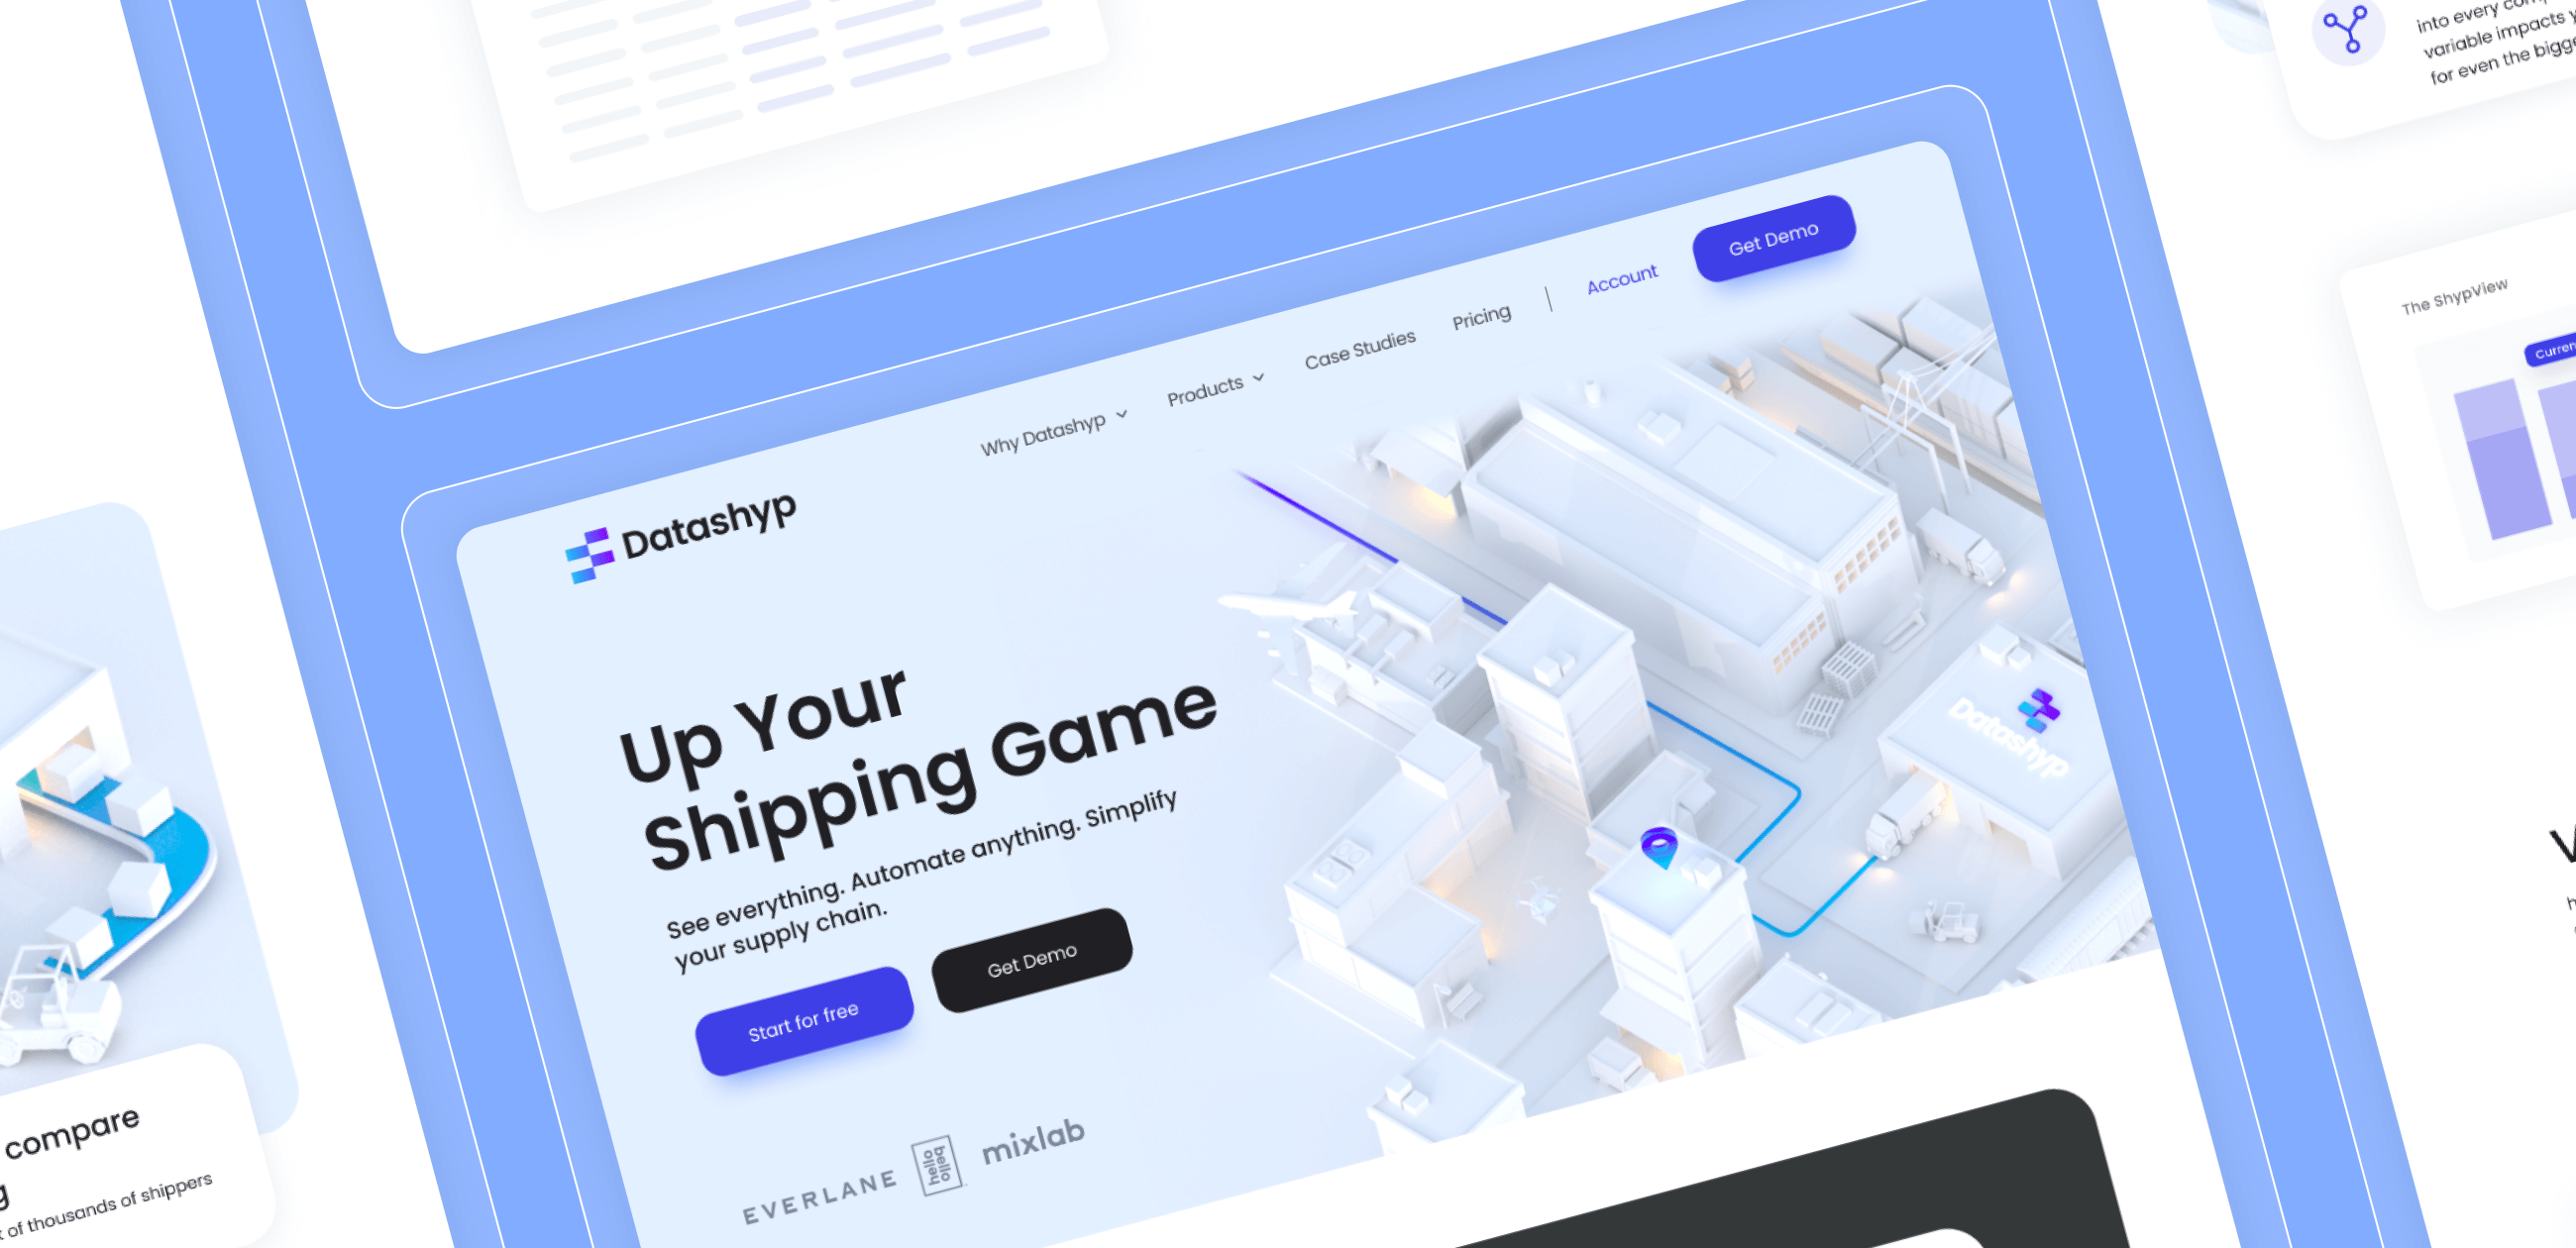 Datashyp – shipping management SaaS platform - Website Development - Photo 1